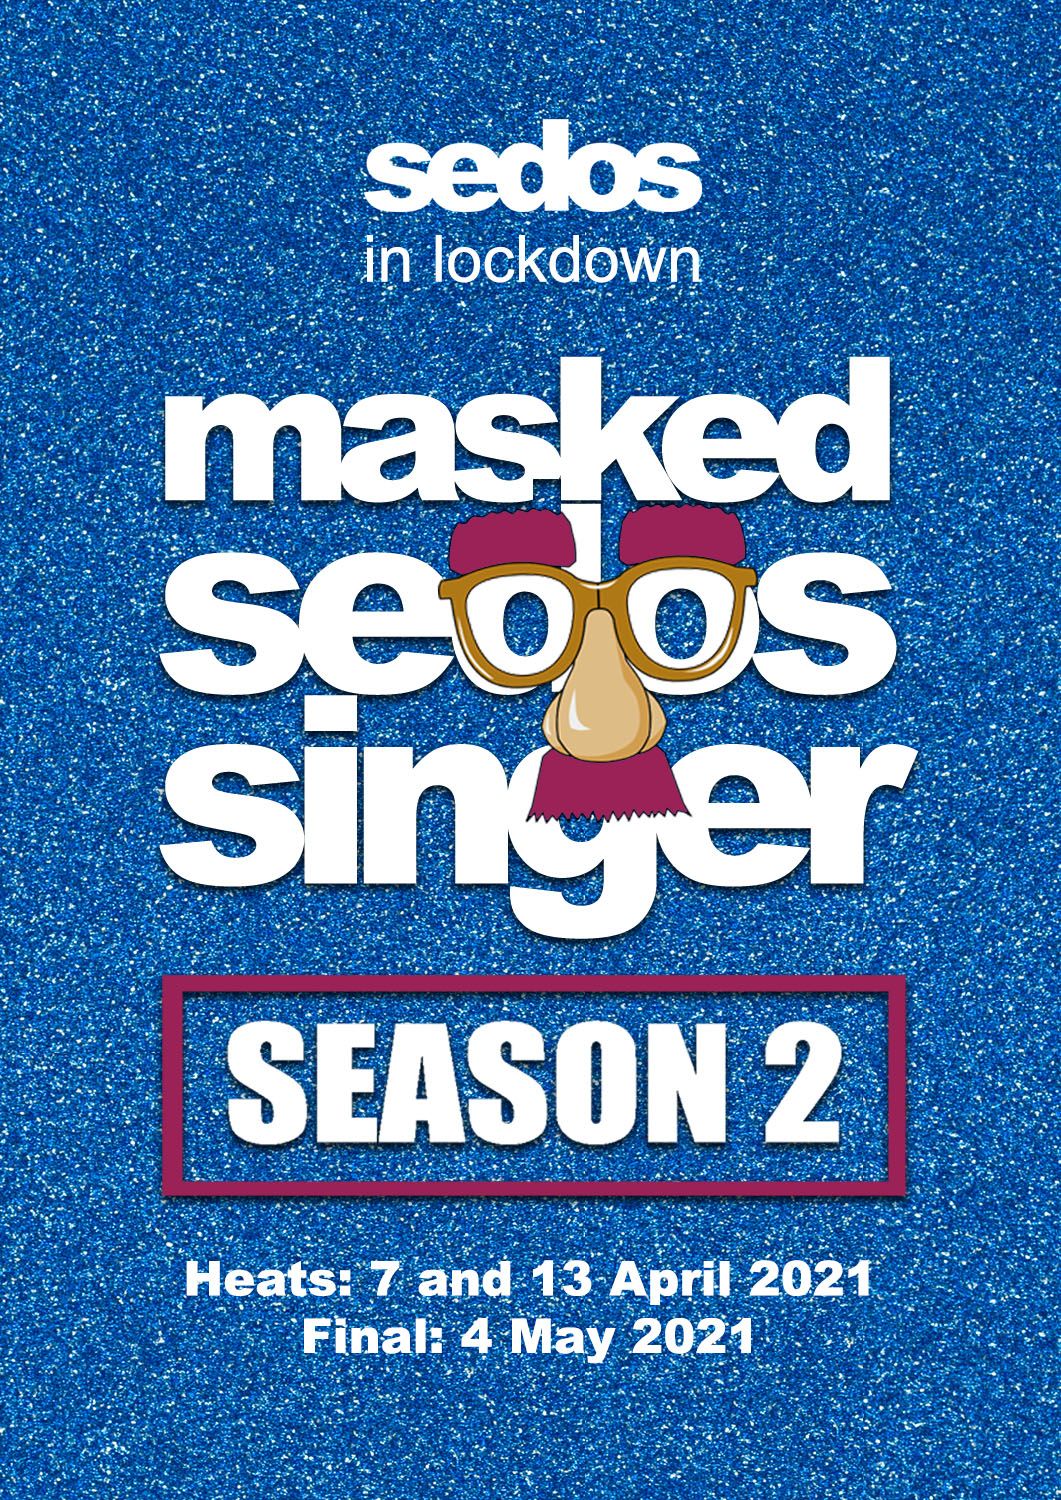 Masked Sedos Singer Season 2 flyer image